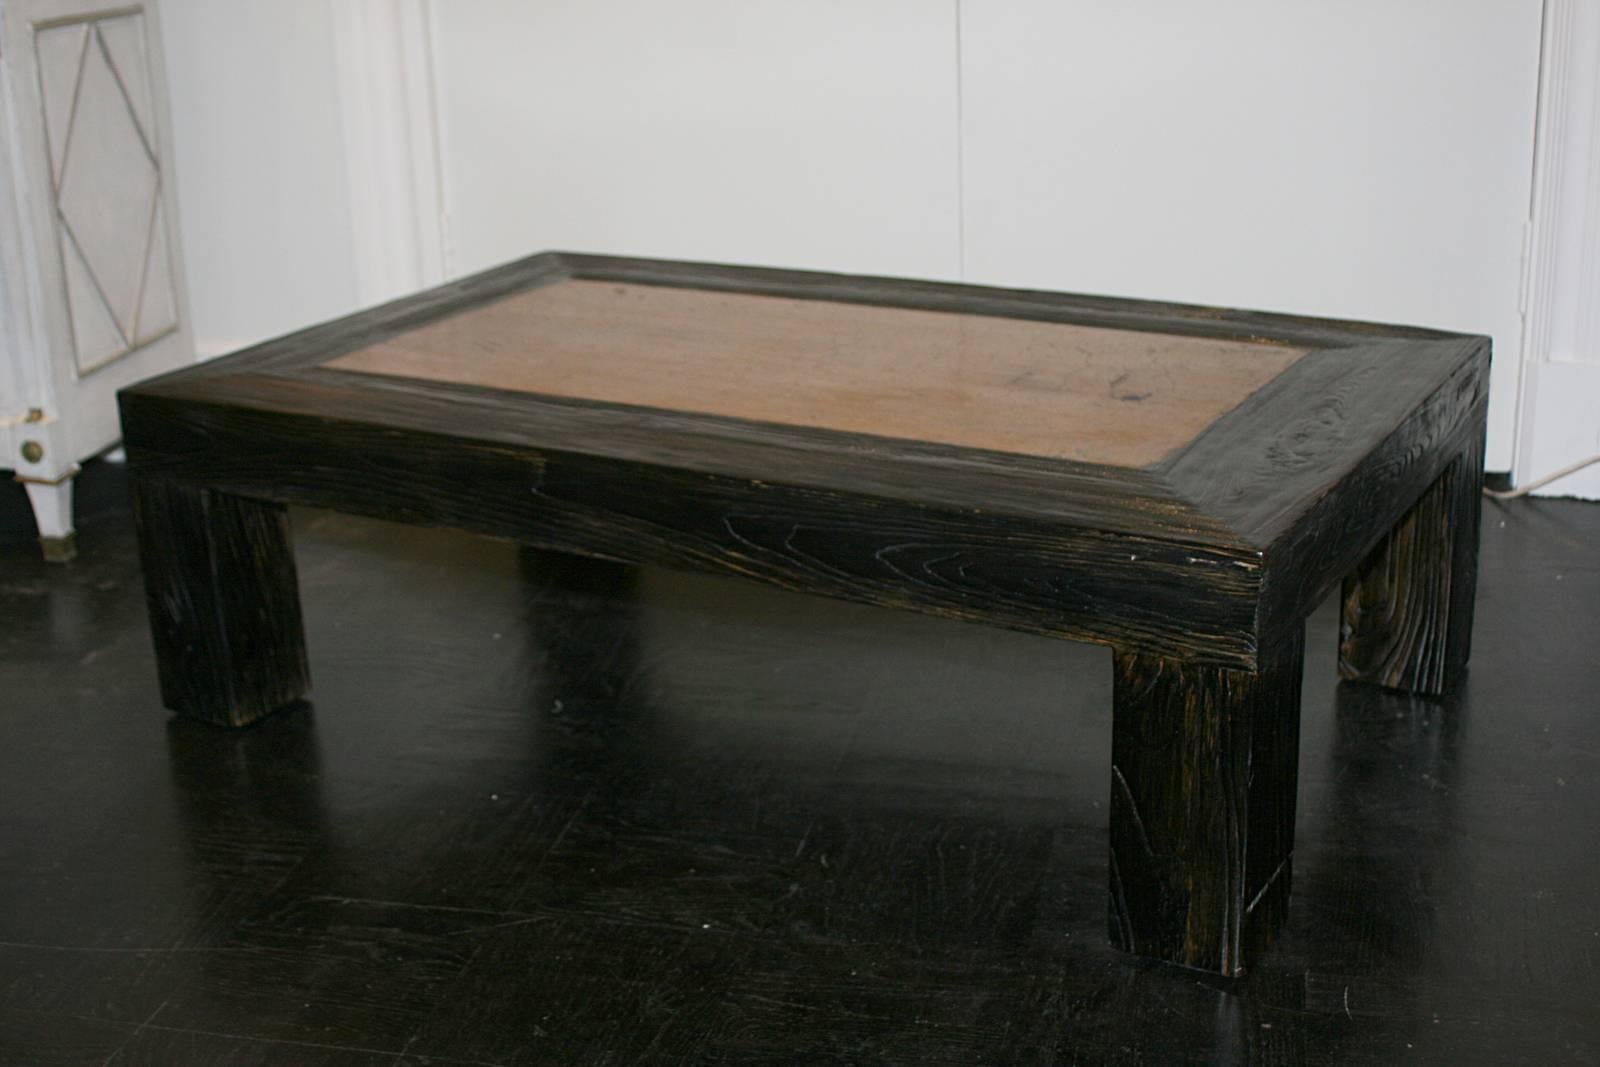 Early 20th century ebonized exotic wood cocktail table, grey stone rectangular inset, square block legs.